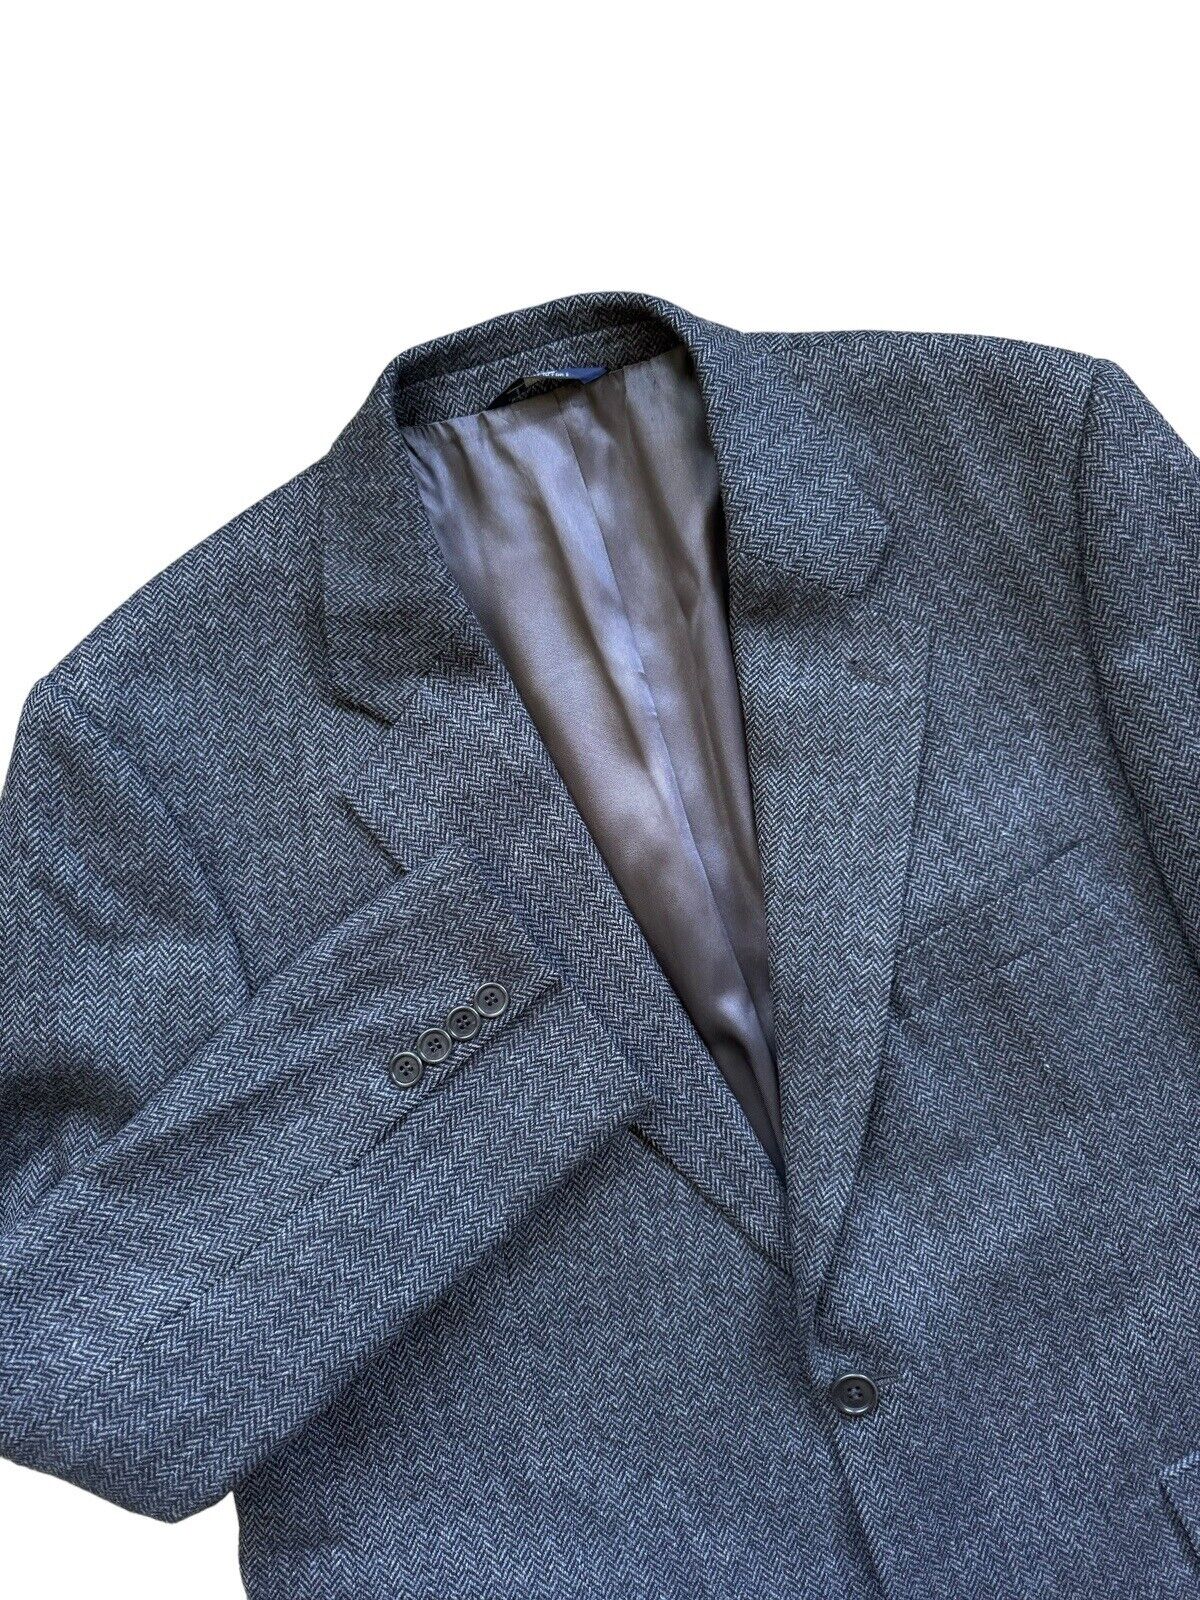 Brooks Brothers 346 Gray Herringbone 100% Wool Sp… - image 2